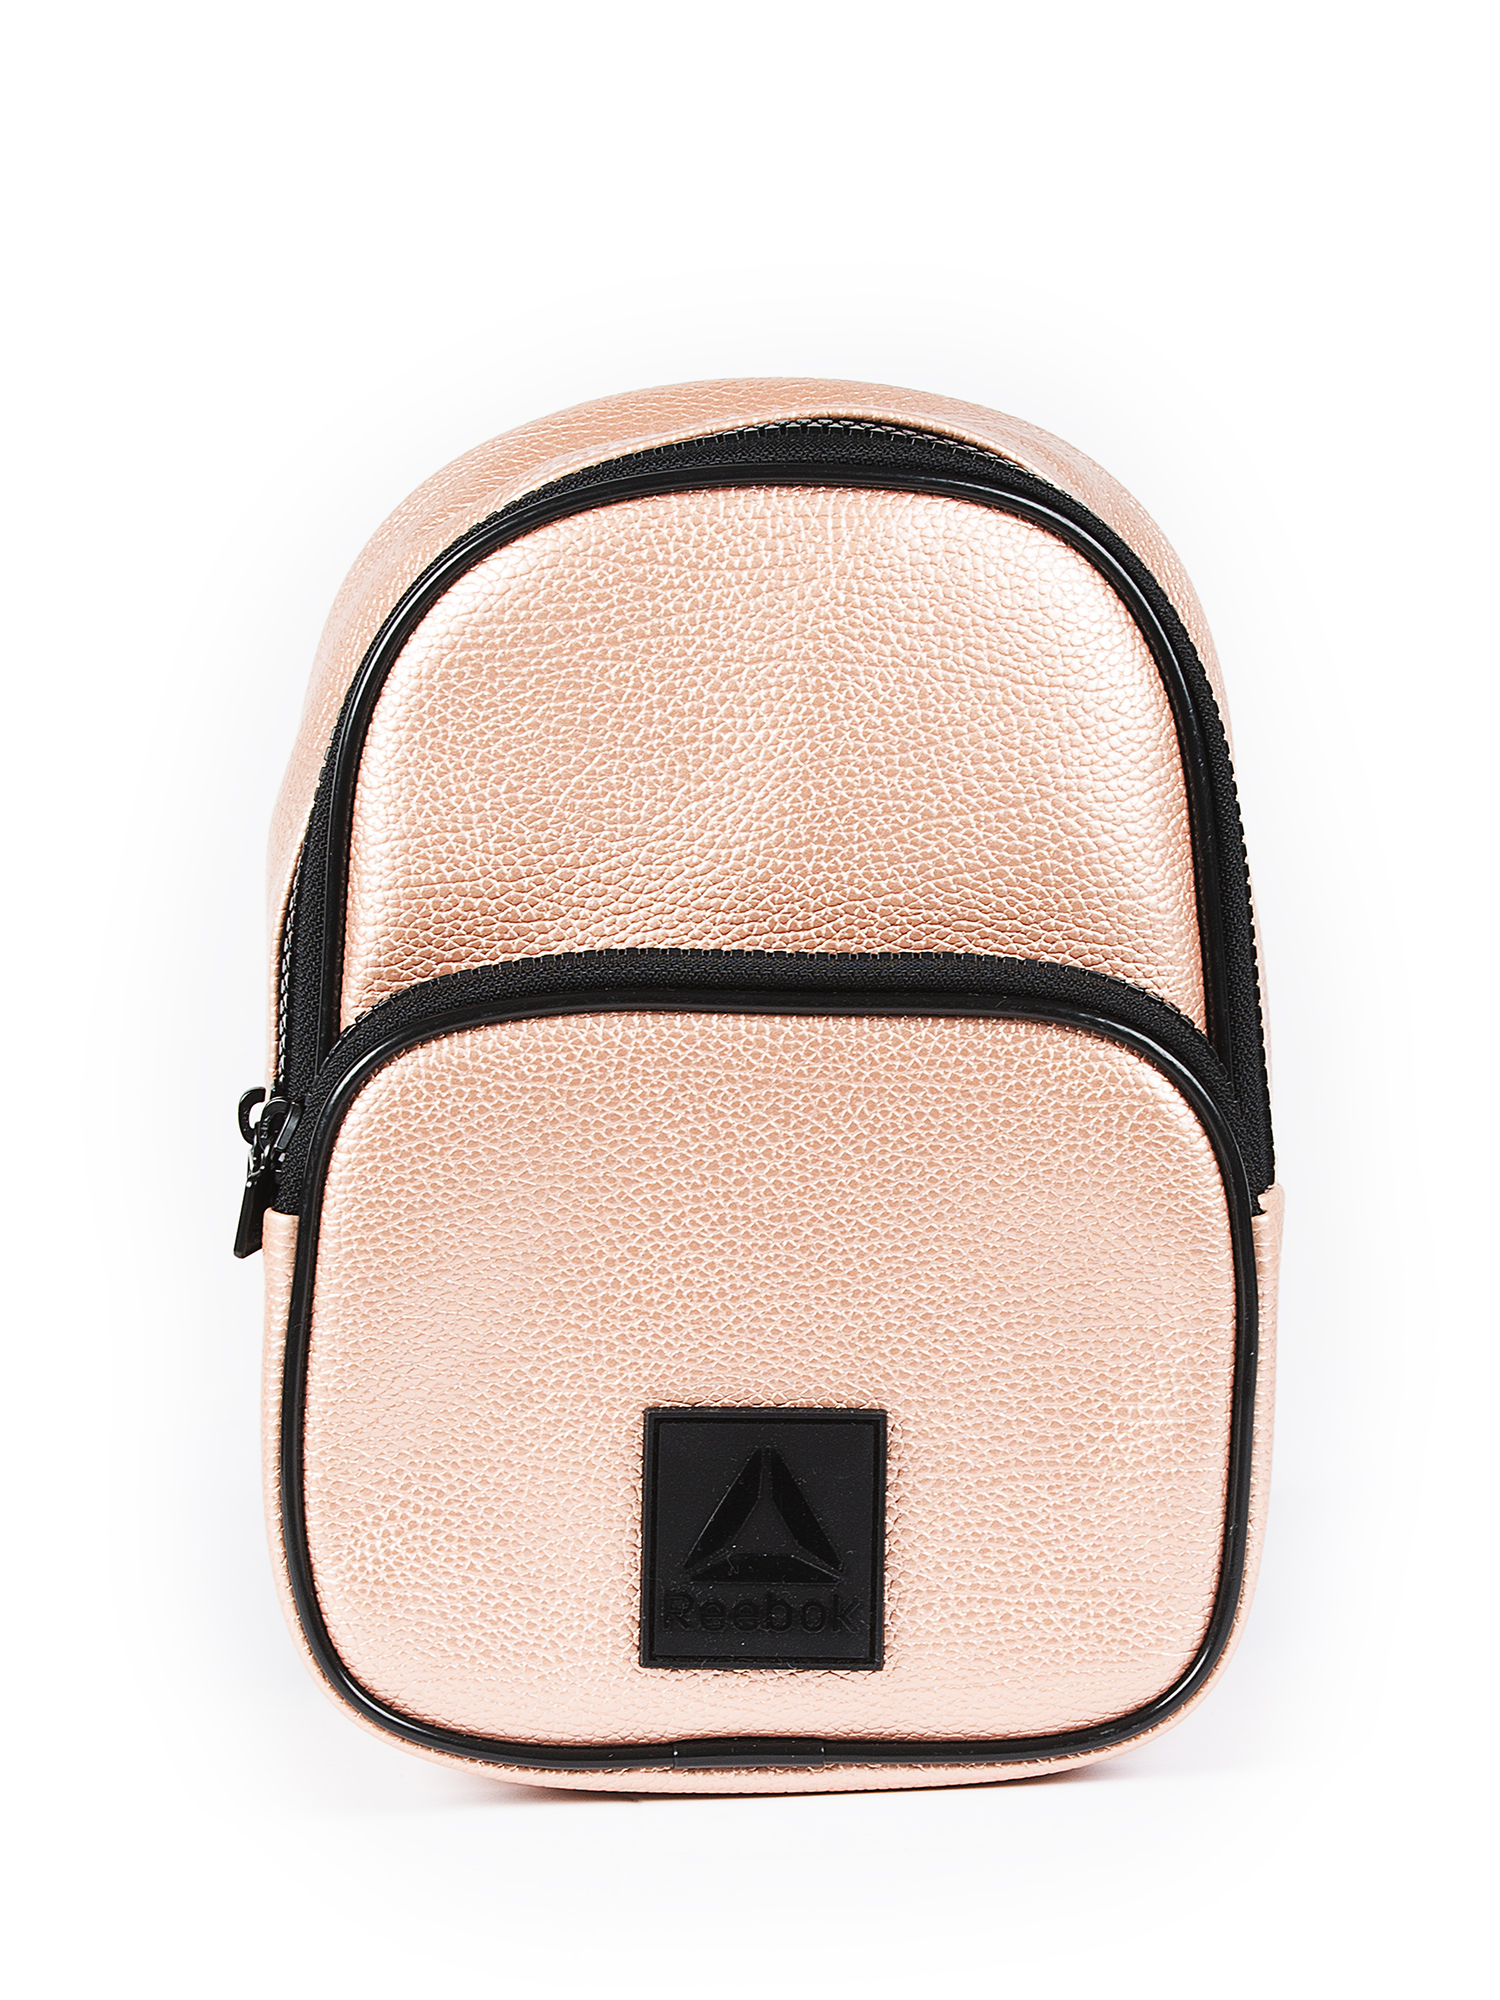 Reebok Classic Women's Mini Backpack Gold - image 2 of 4